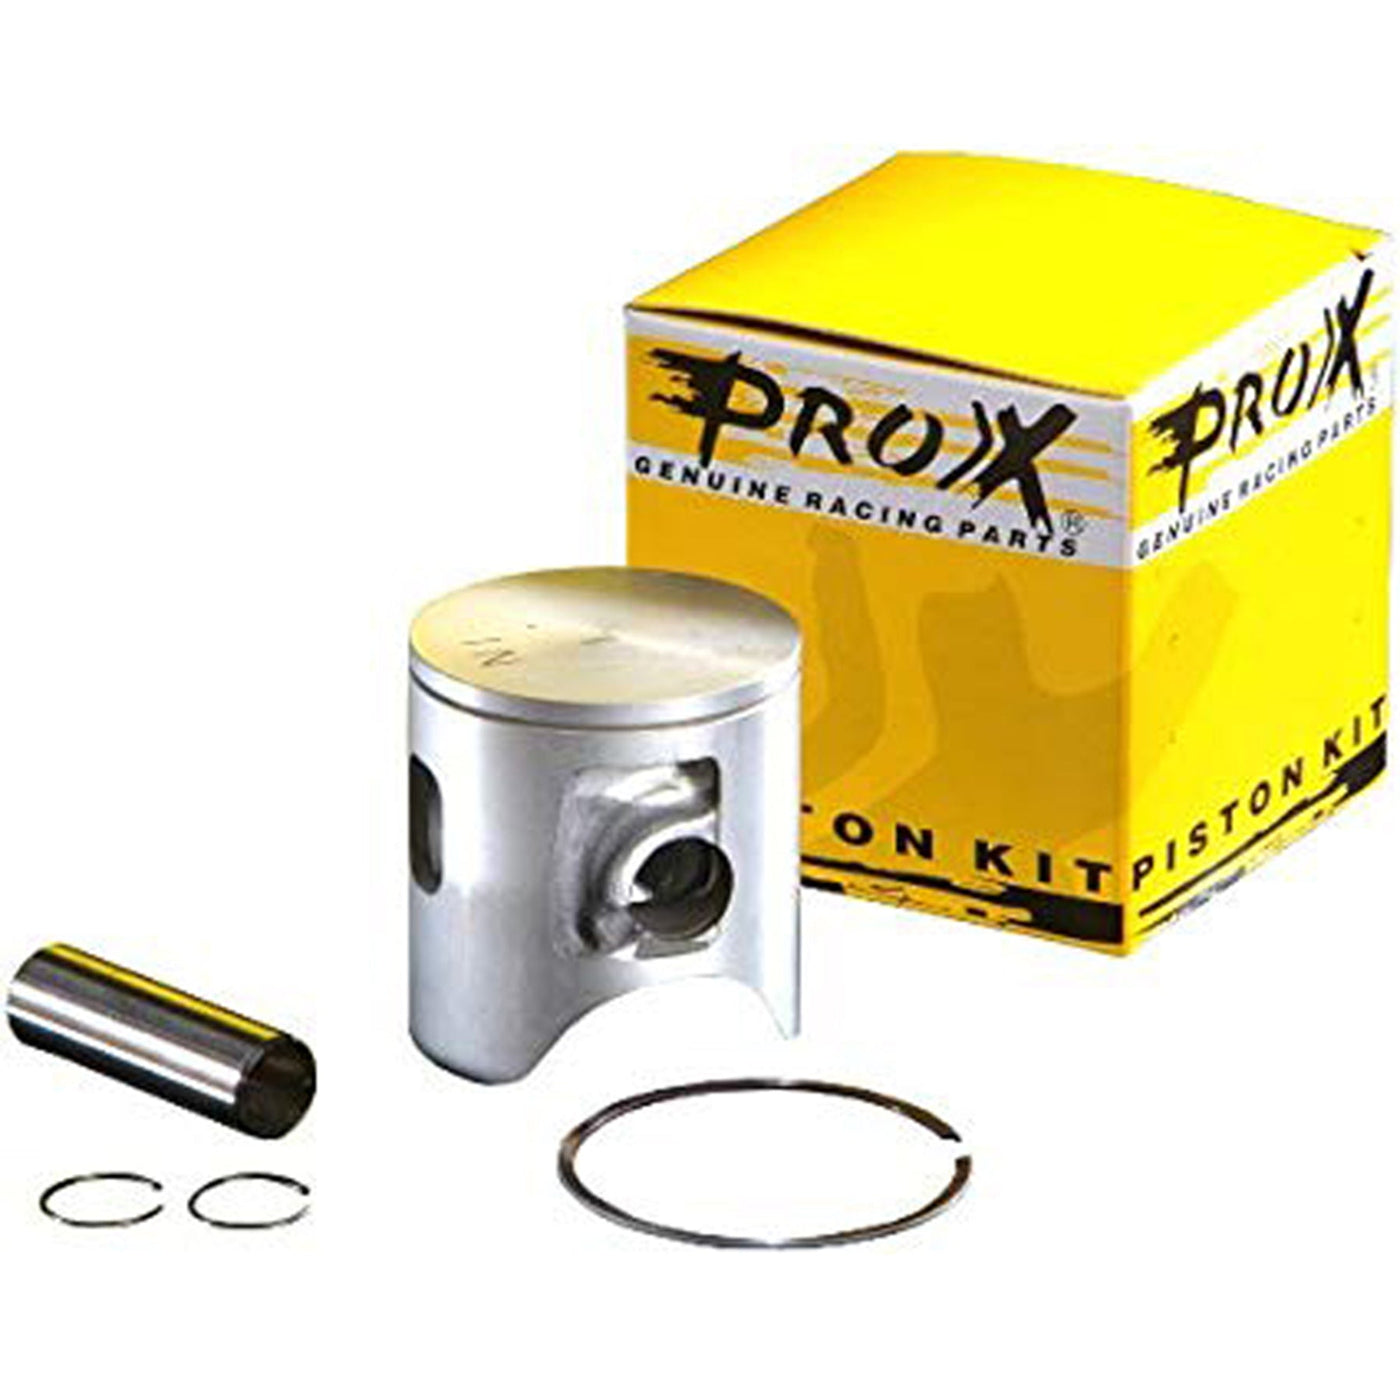 Prox 01.2510.025 Prox Piston Kit Superjet 700 + Wave Runner 1100 #01.2510.025